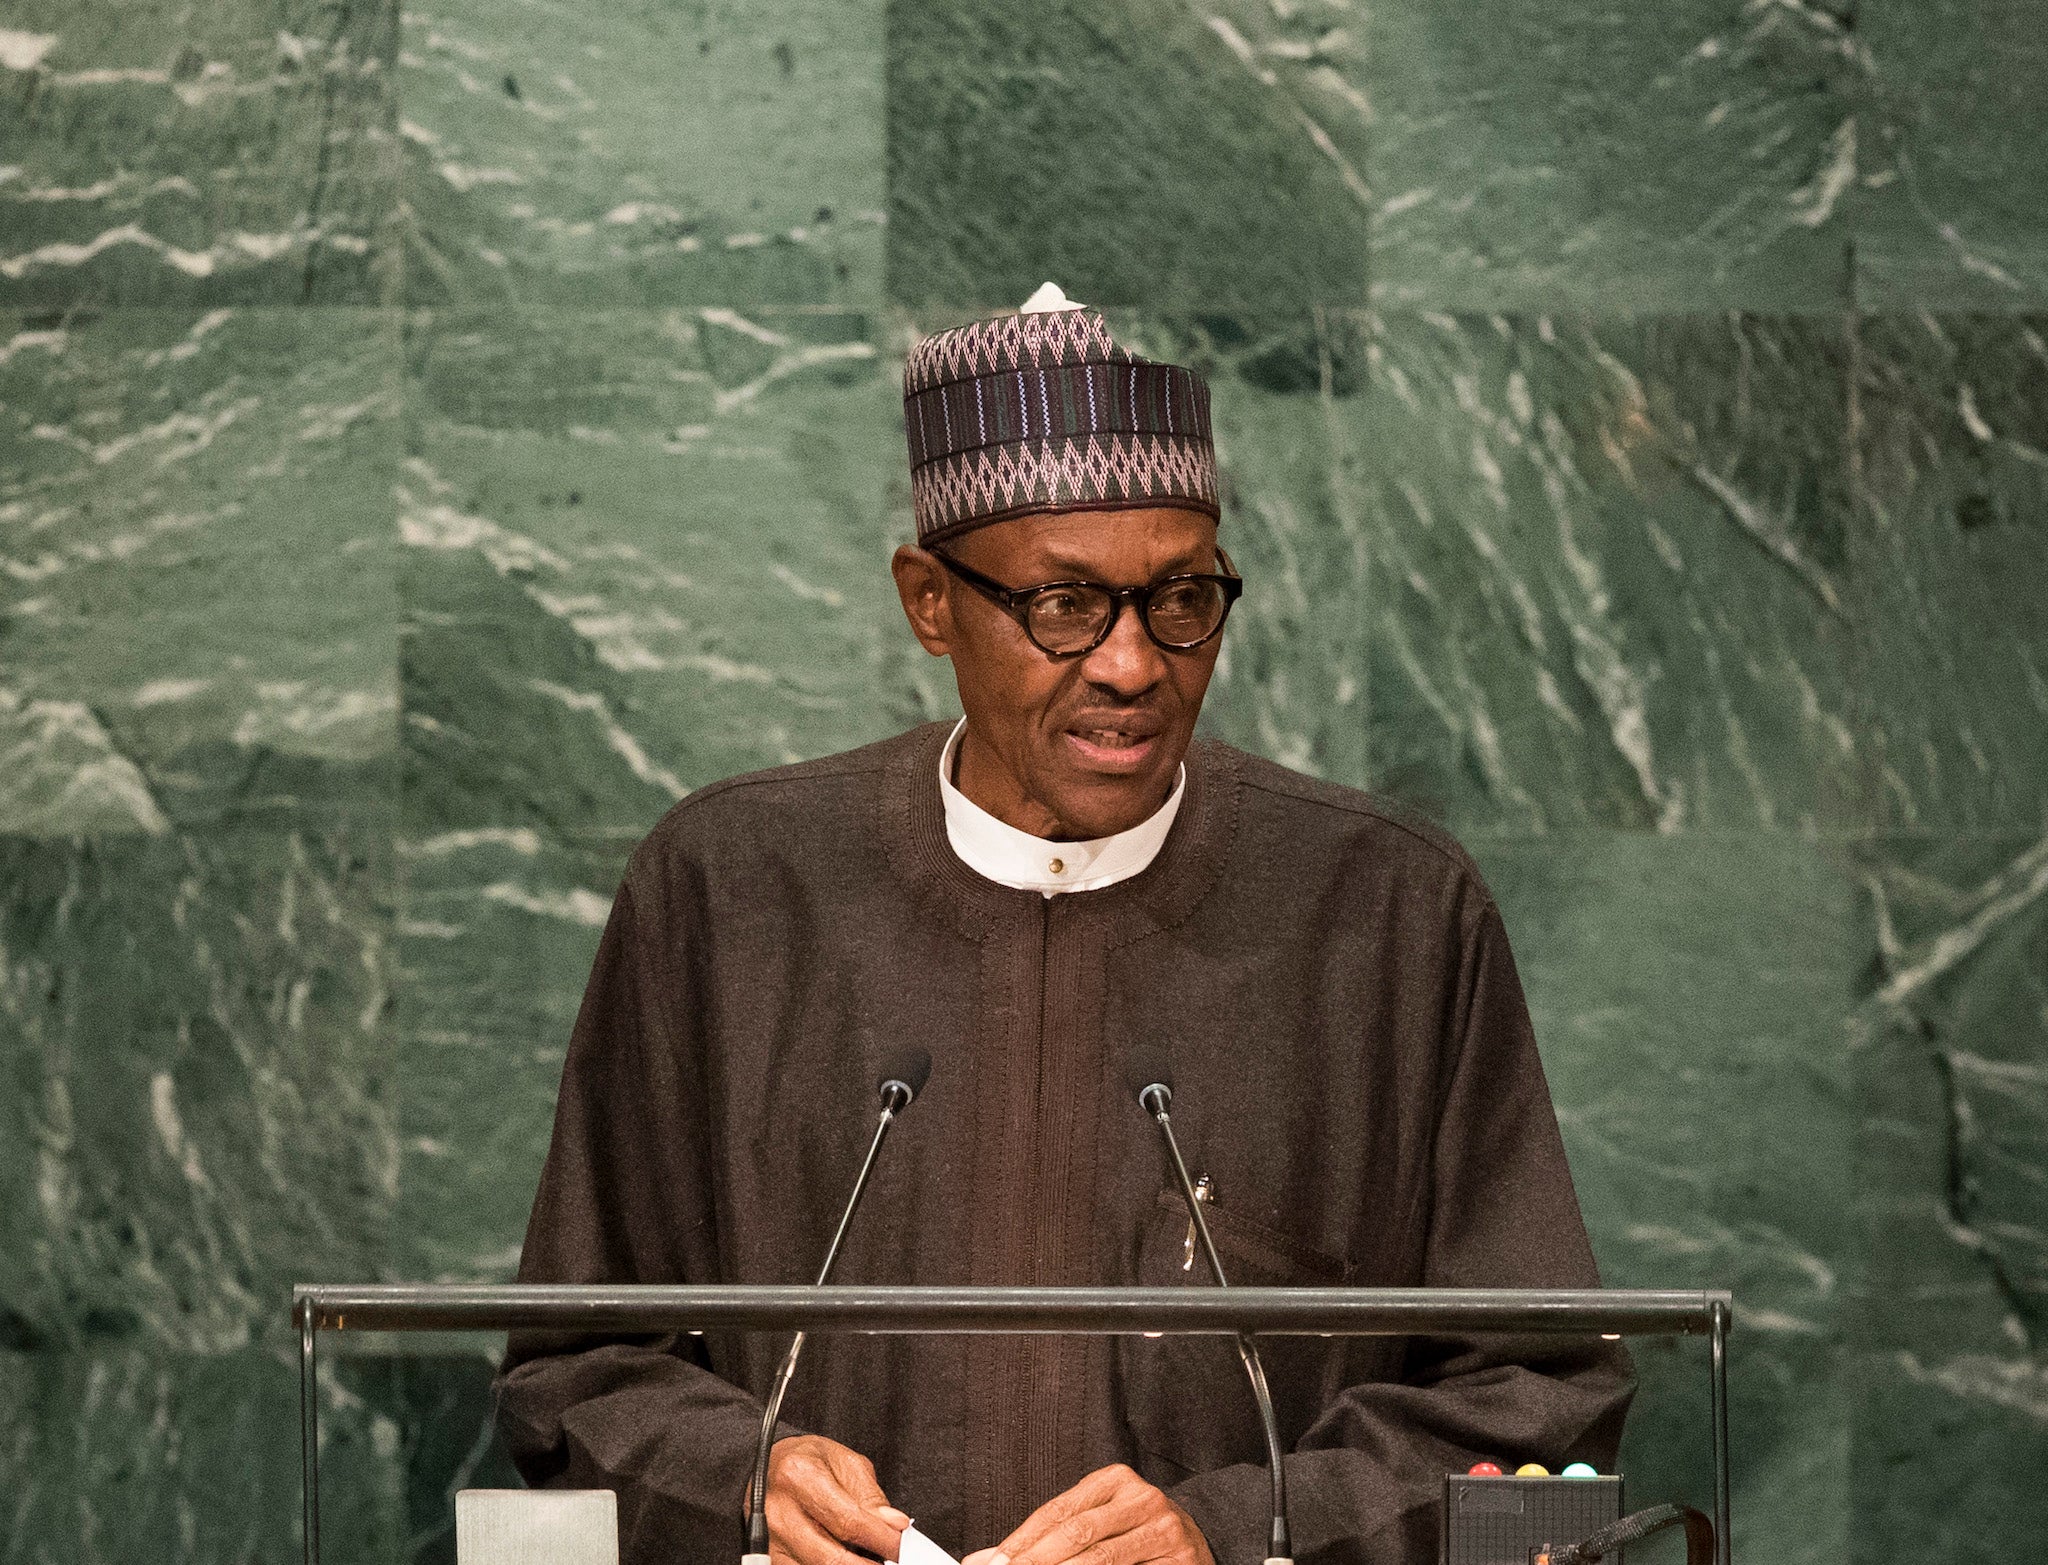 President of Nigeria Muhammadu Buhari addresses the UN General Assembly in New York on September 20, 2016